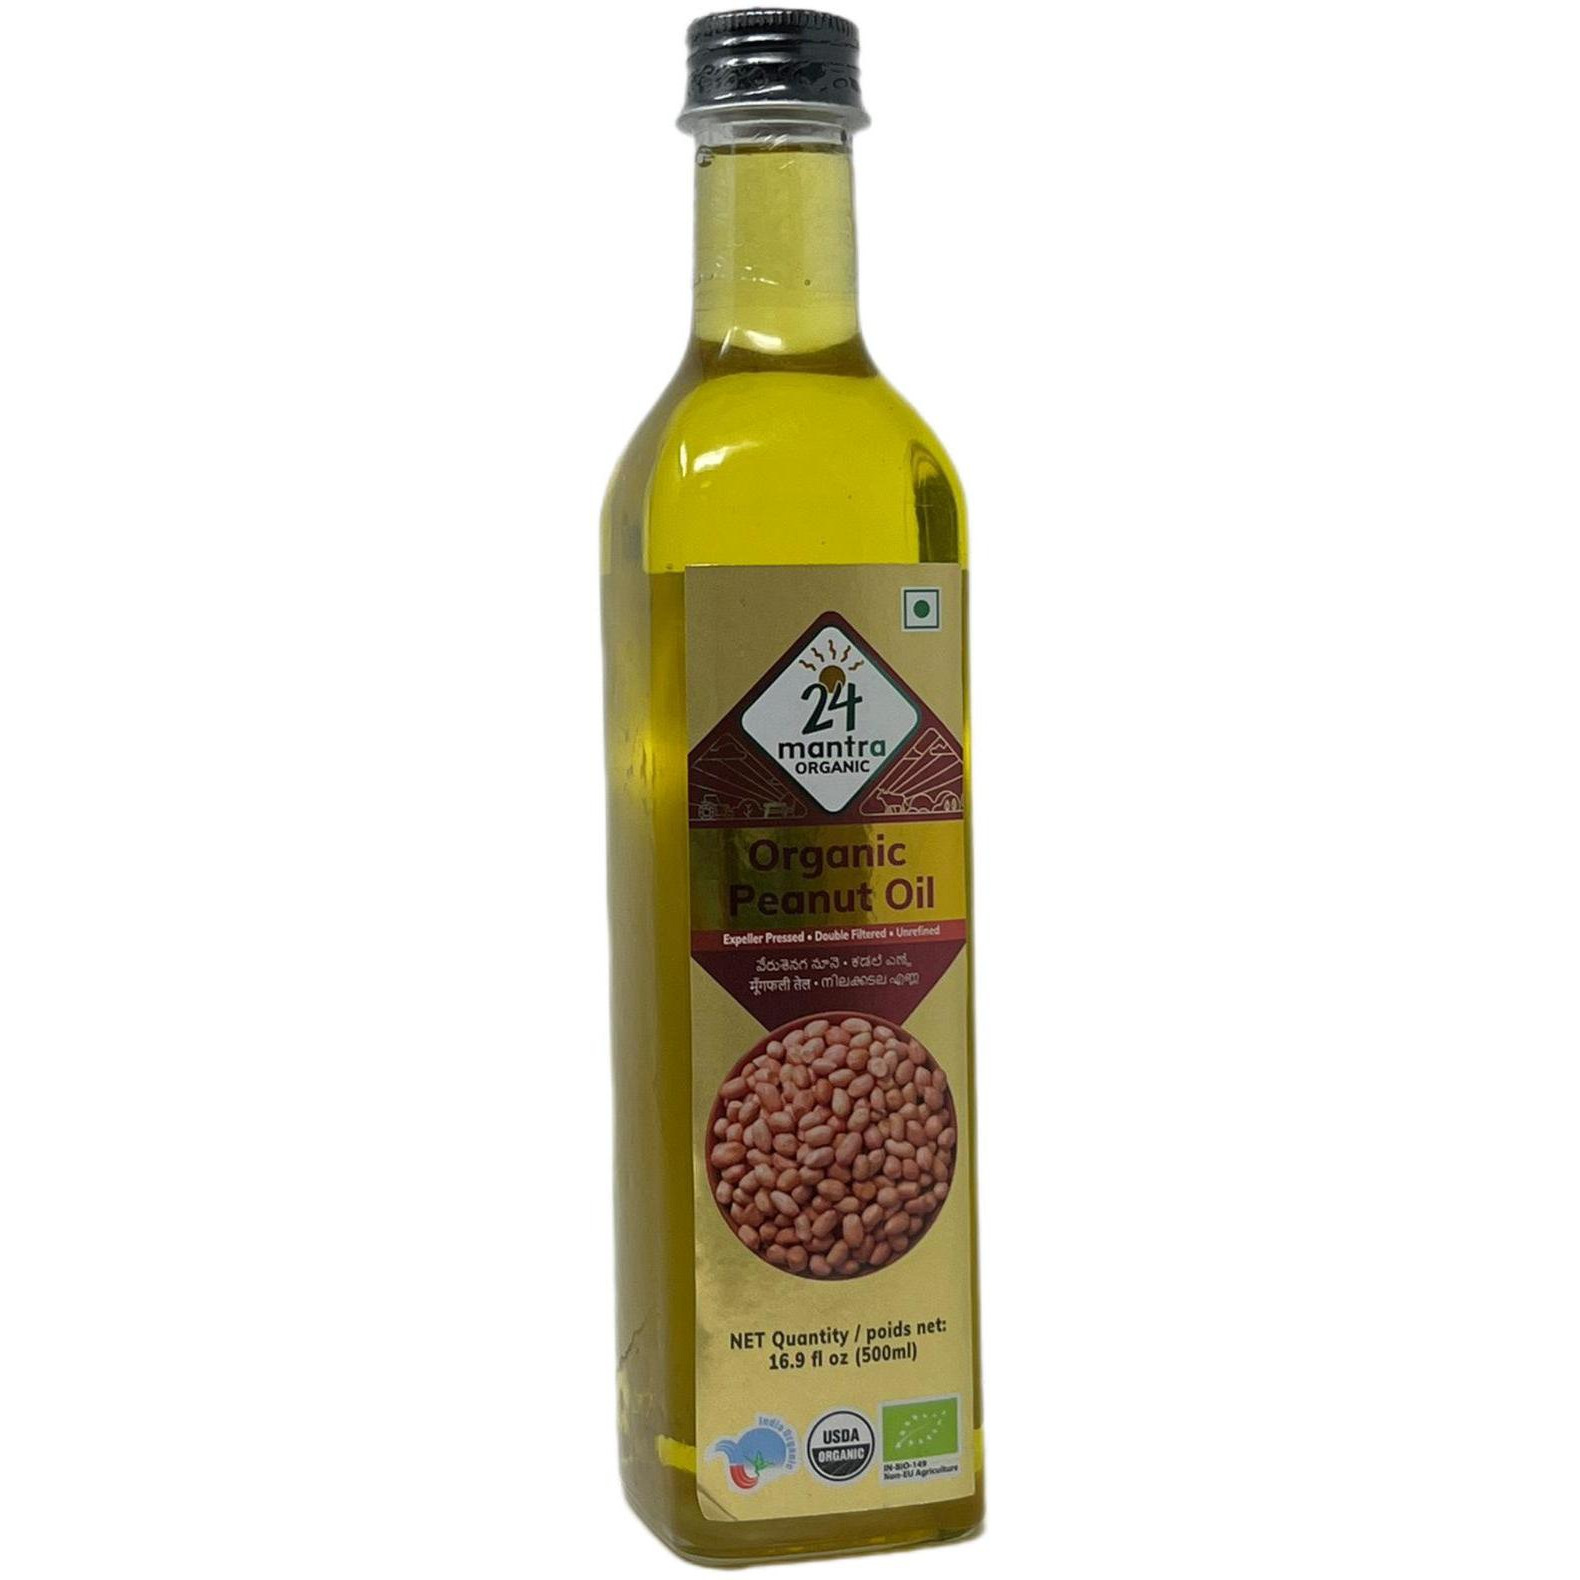 Case of 12 - 24 Mantra Organic Peanut Oil - 500 Ml (16.9 Fl Oz)